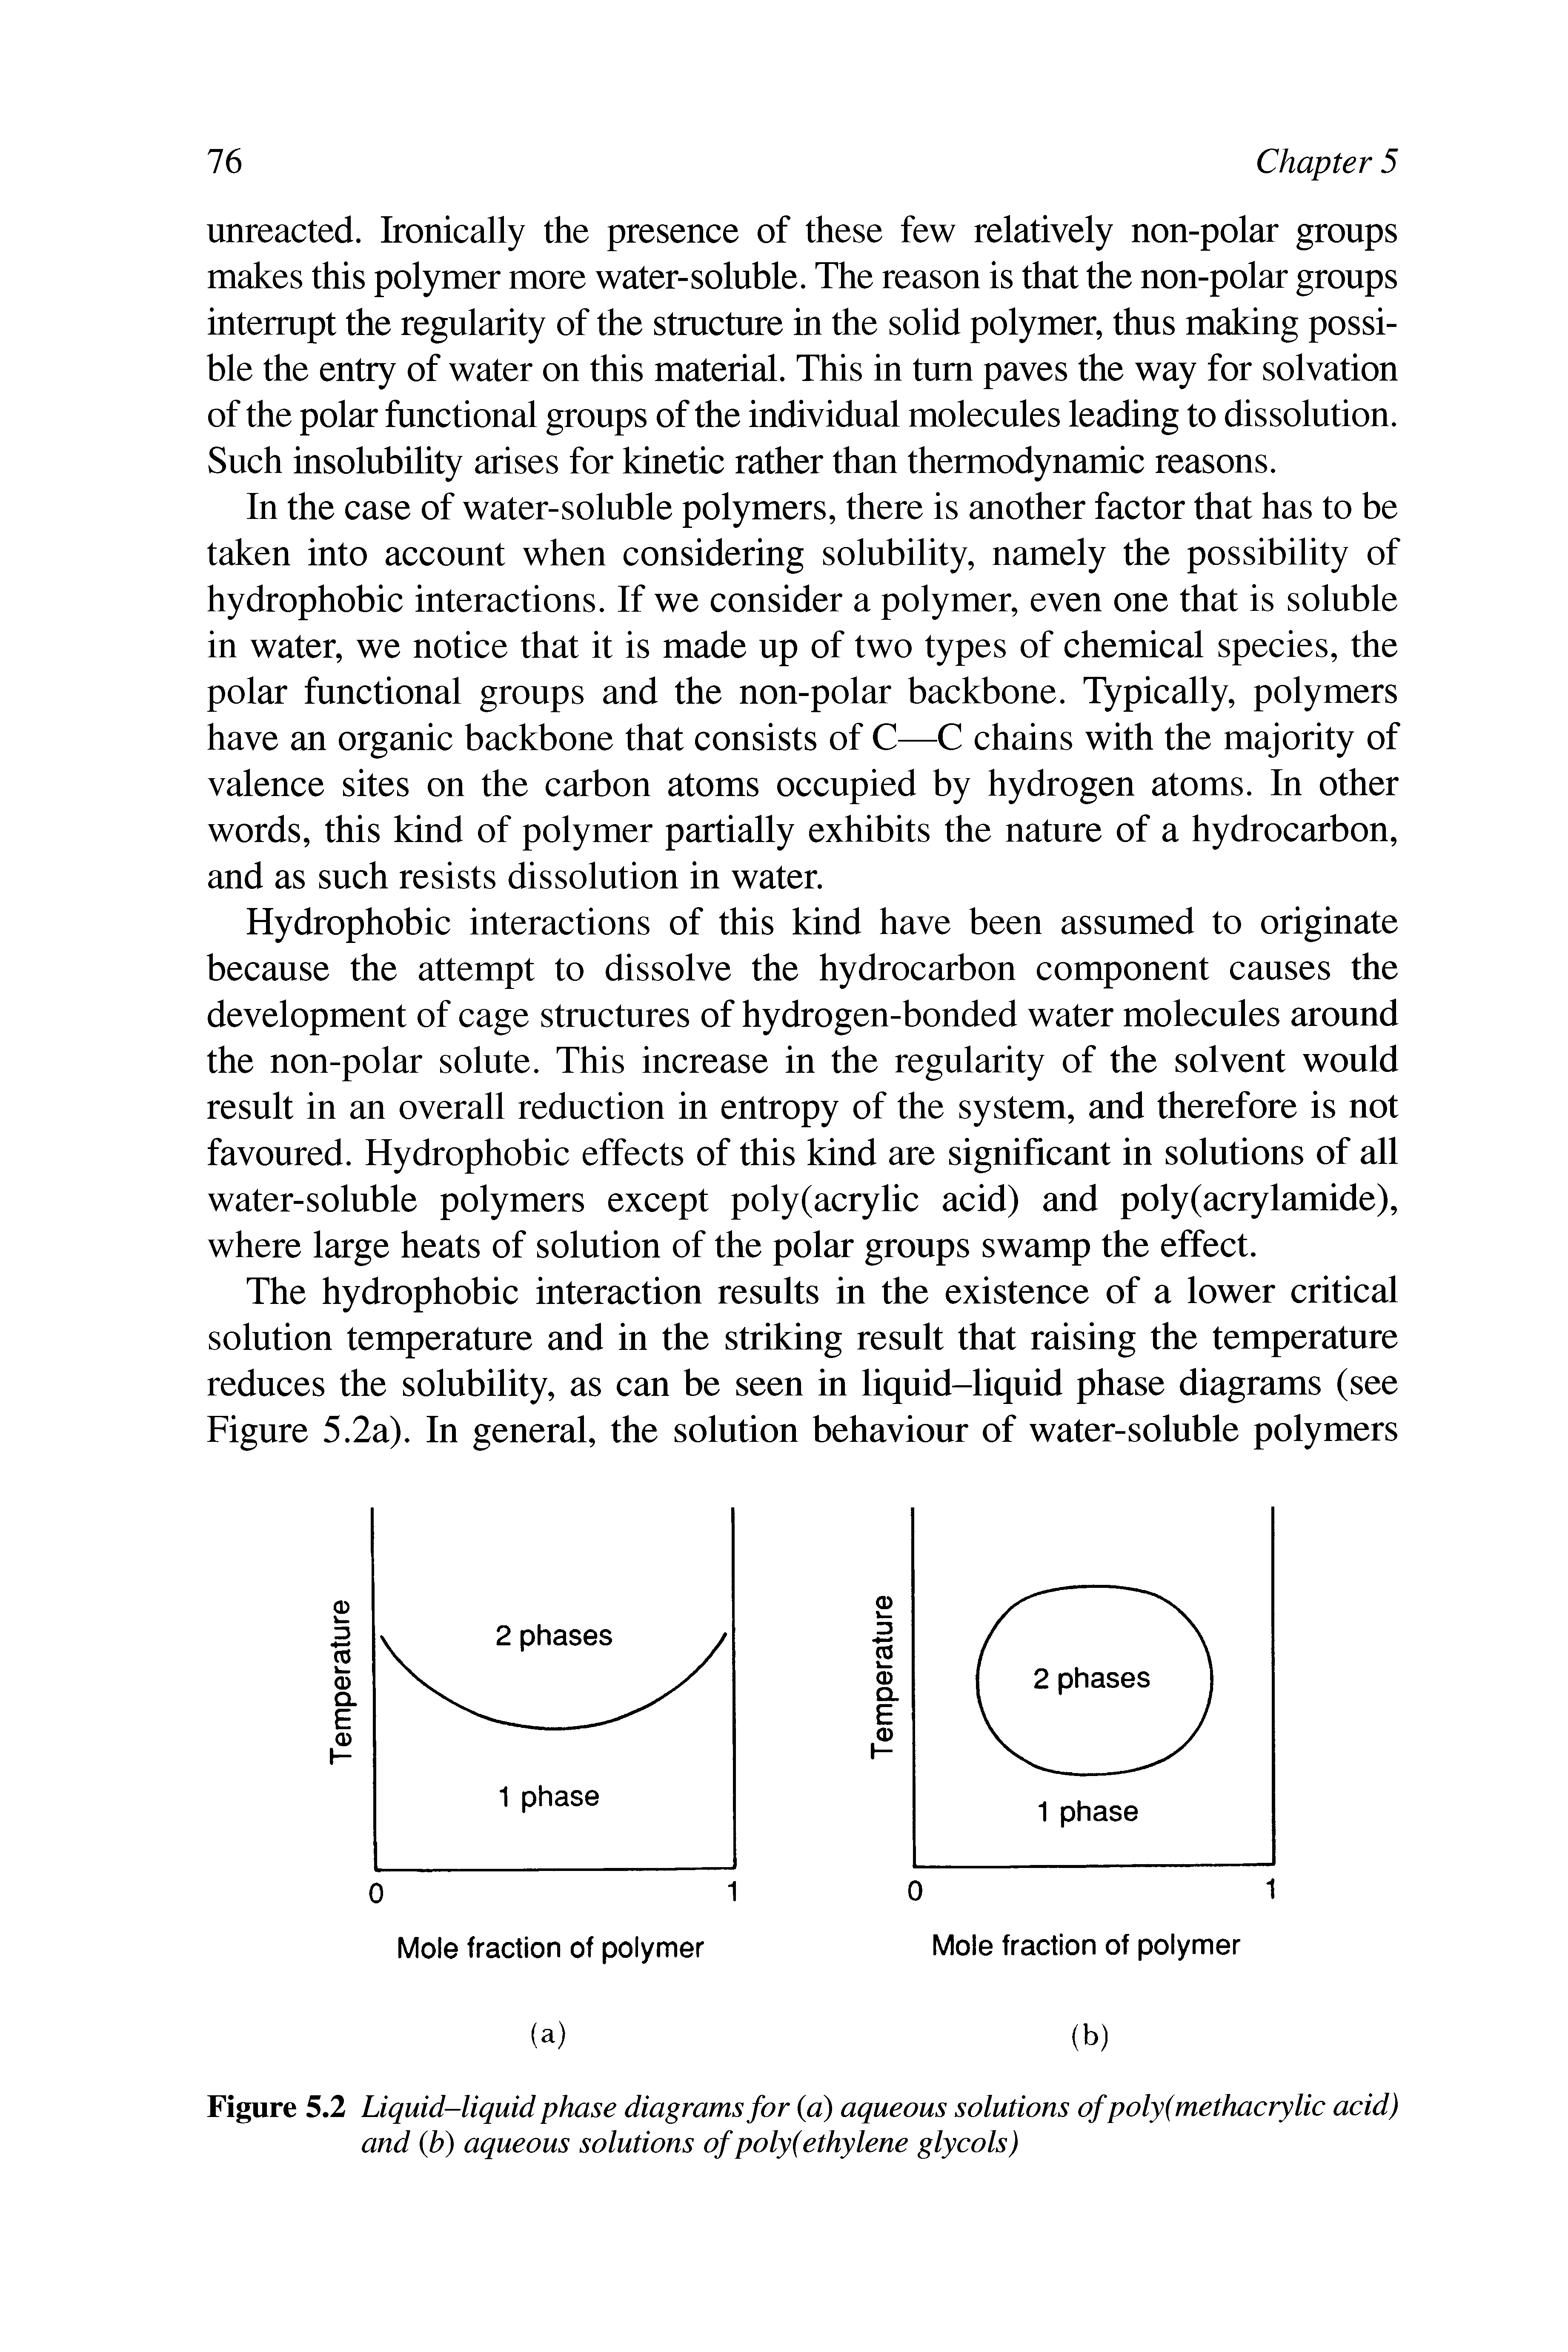 Figure 5.2 Liquid-liquid phase diagrams for a) aqueous solutions ofpoly(methacrylic acid) and ib) aqueous solutions of poly (ethylene glycols)...